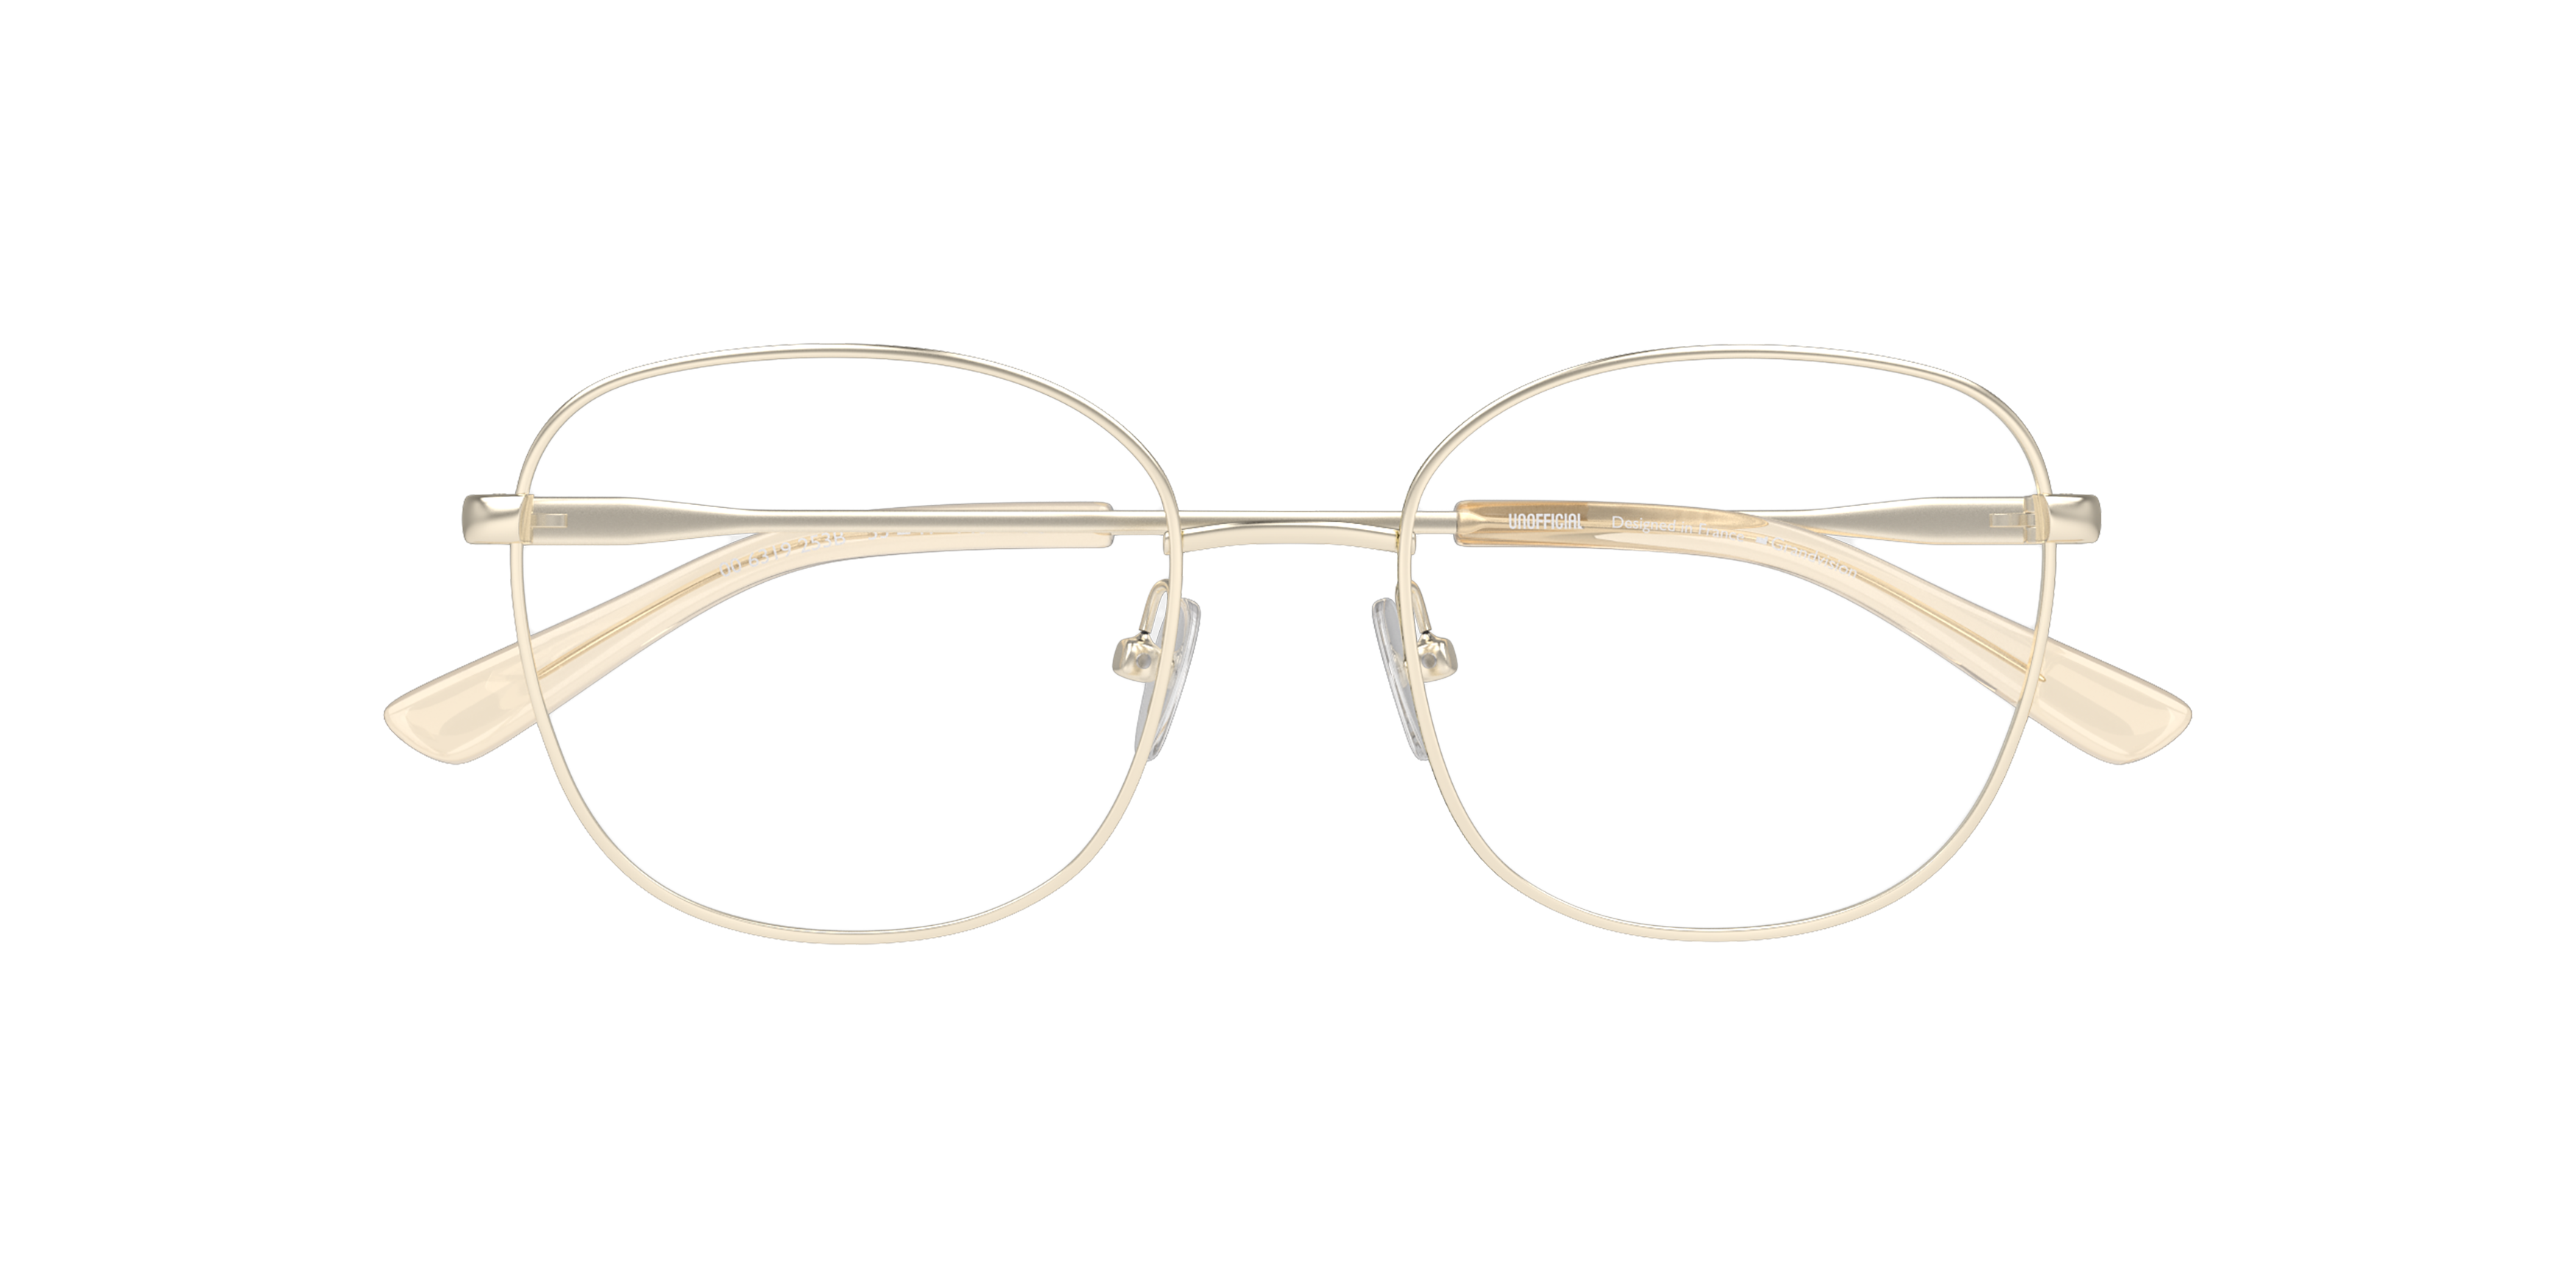 Folded Unofficial UNOF0209 (BD00) Glasses Transparent / Black